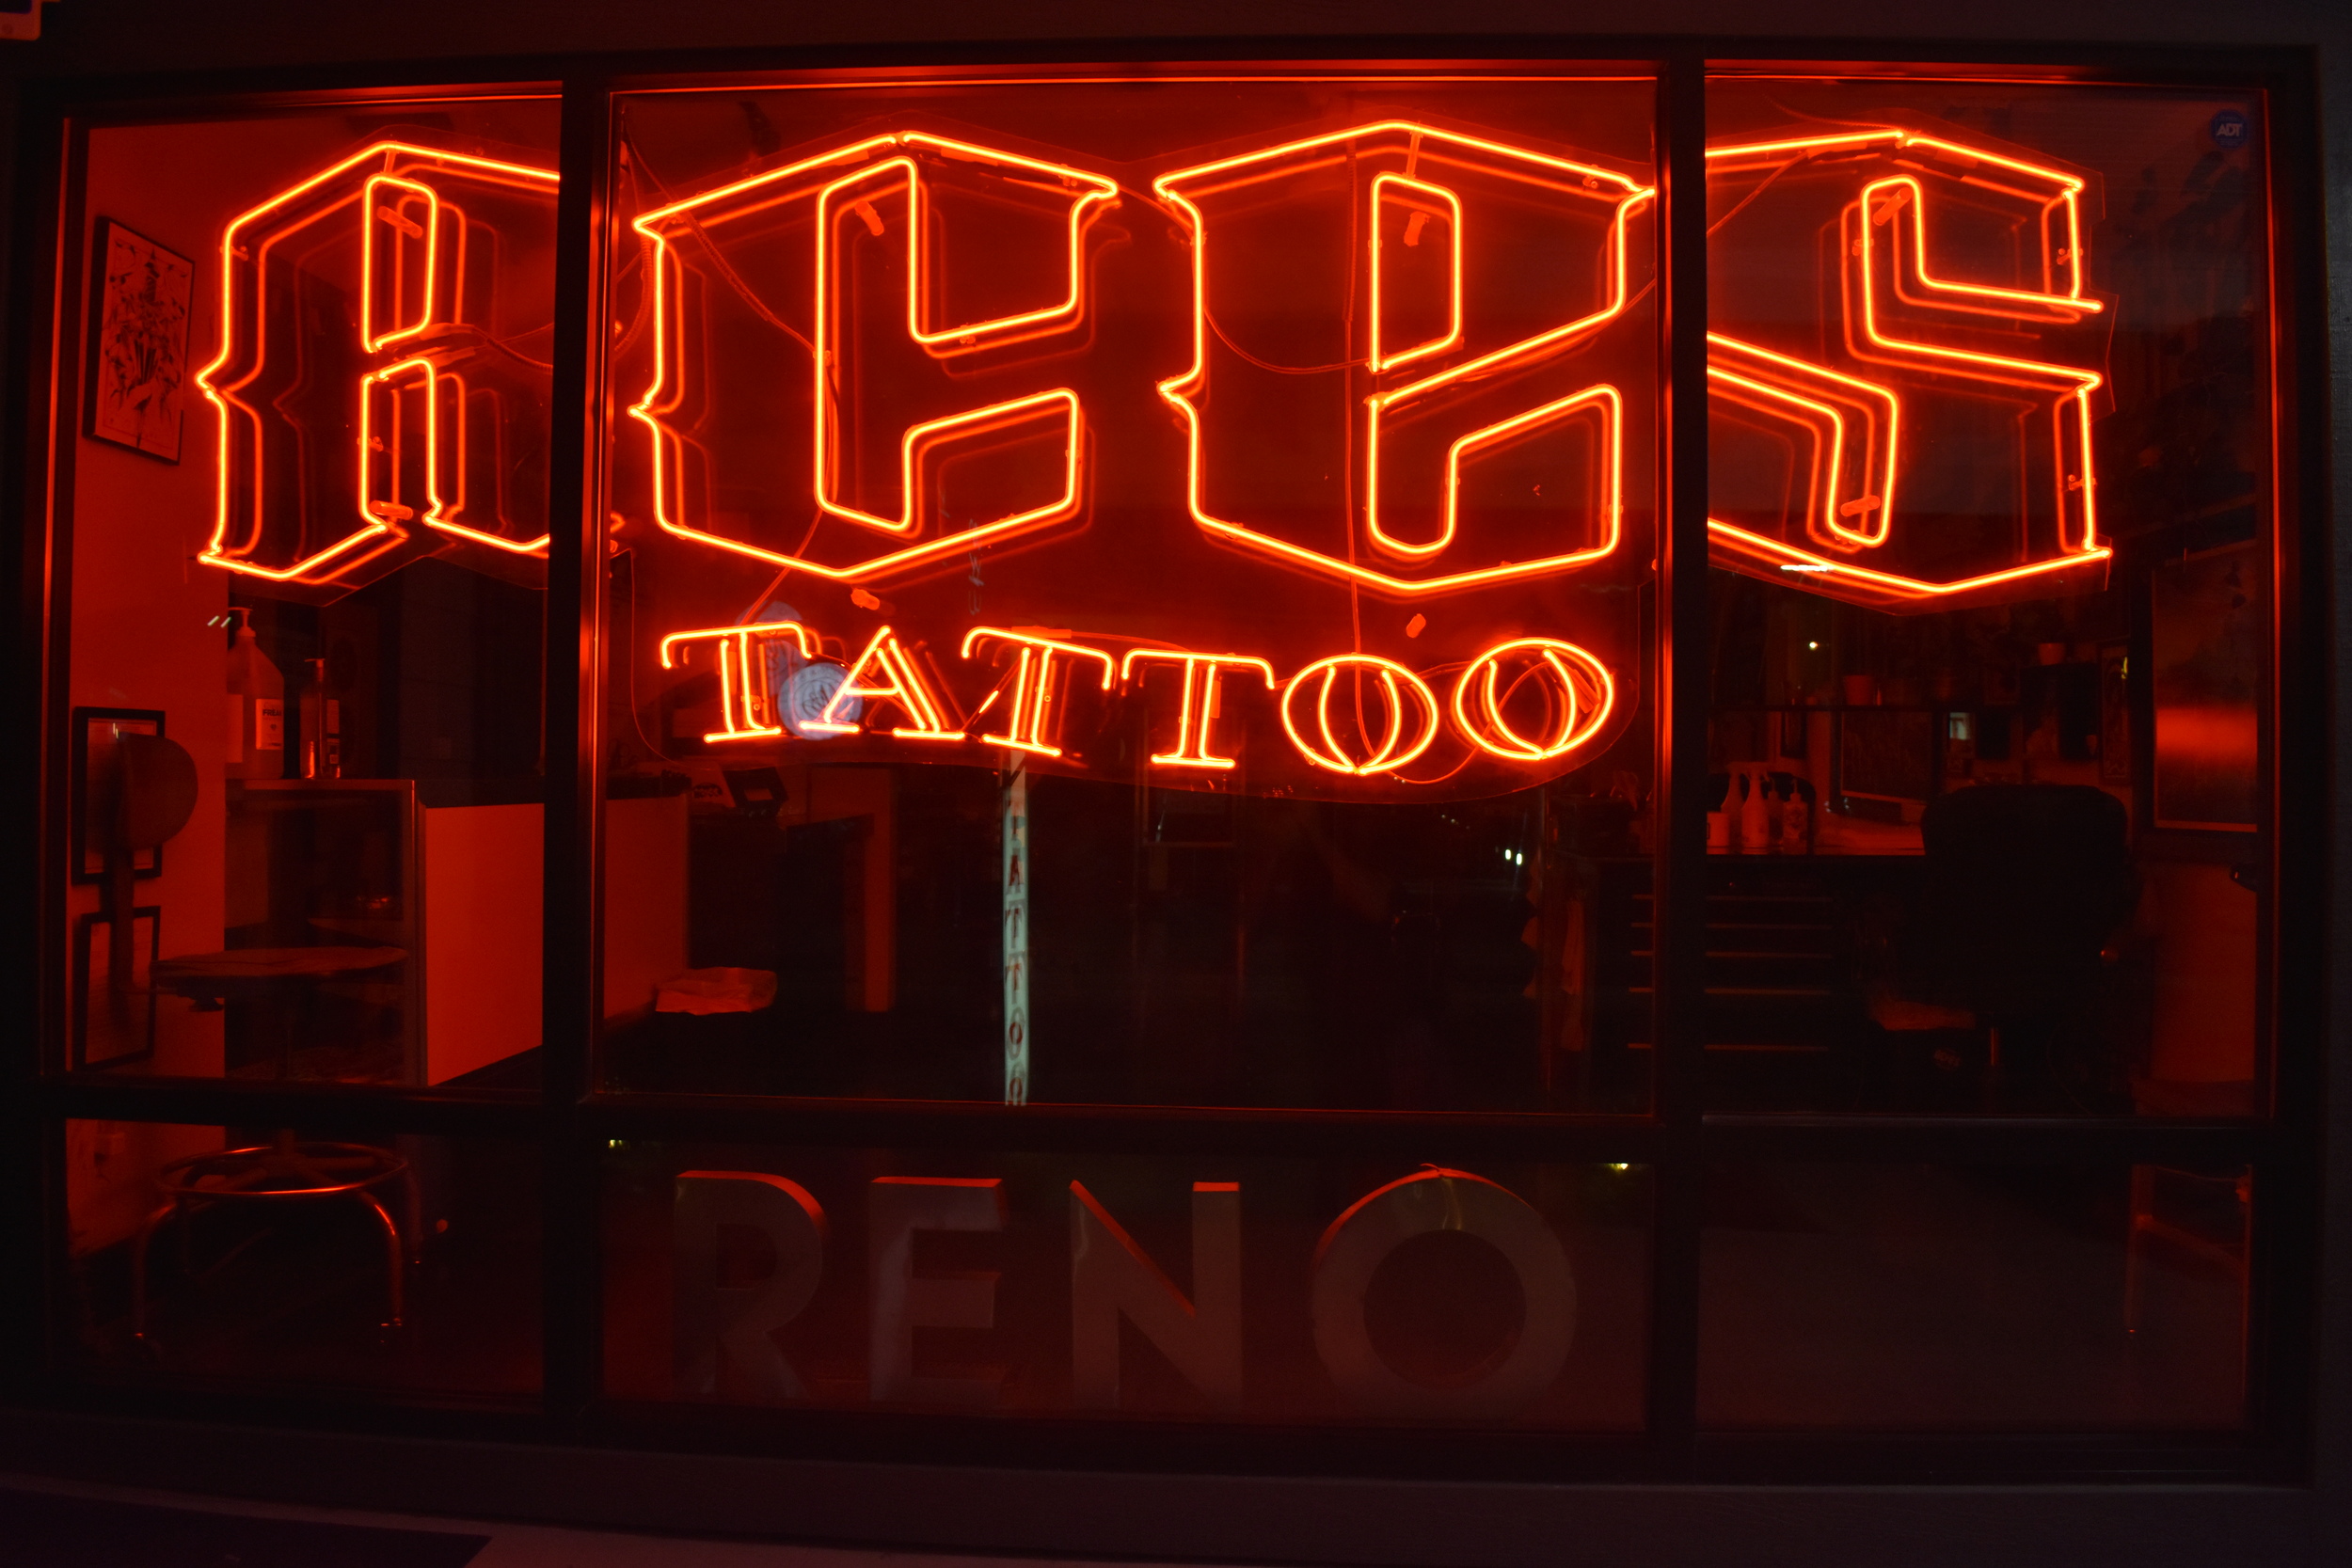 Aces Tattoo window sign, Reno, Nevada: photographic print